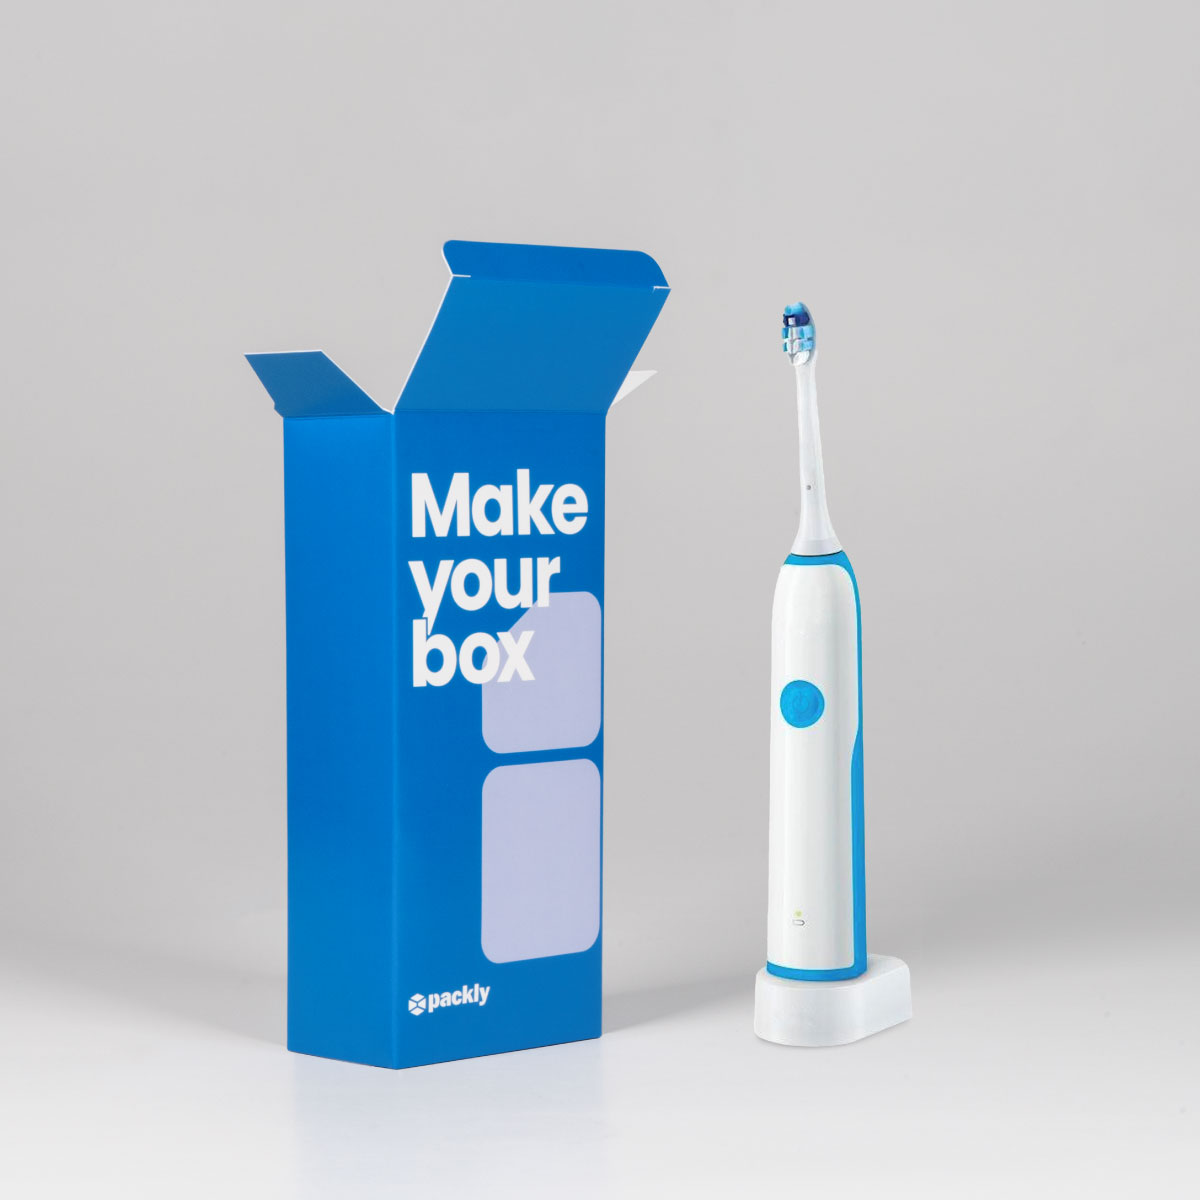 Electric toothbrush packaging